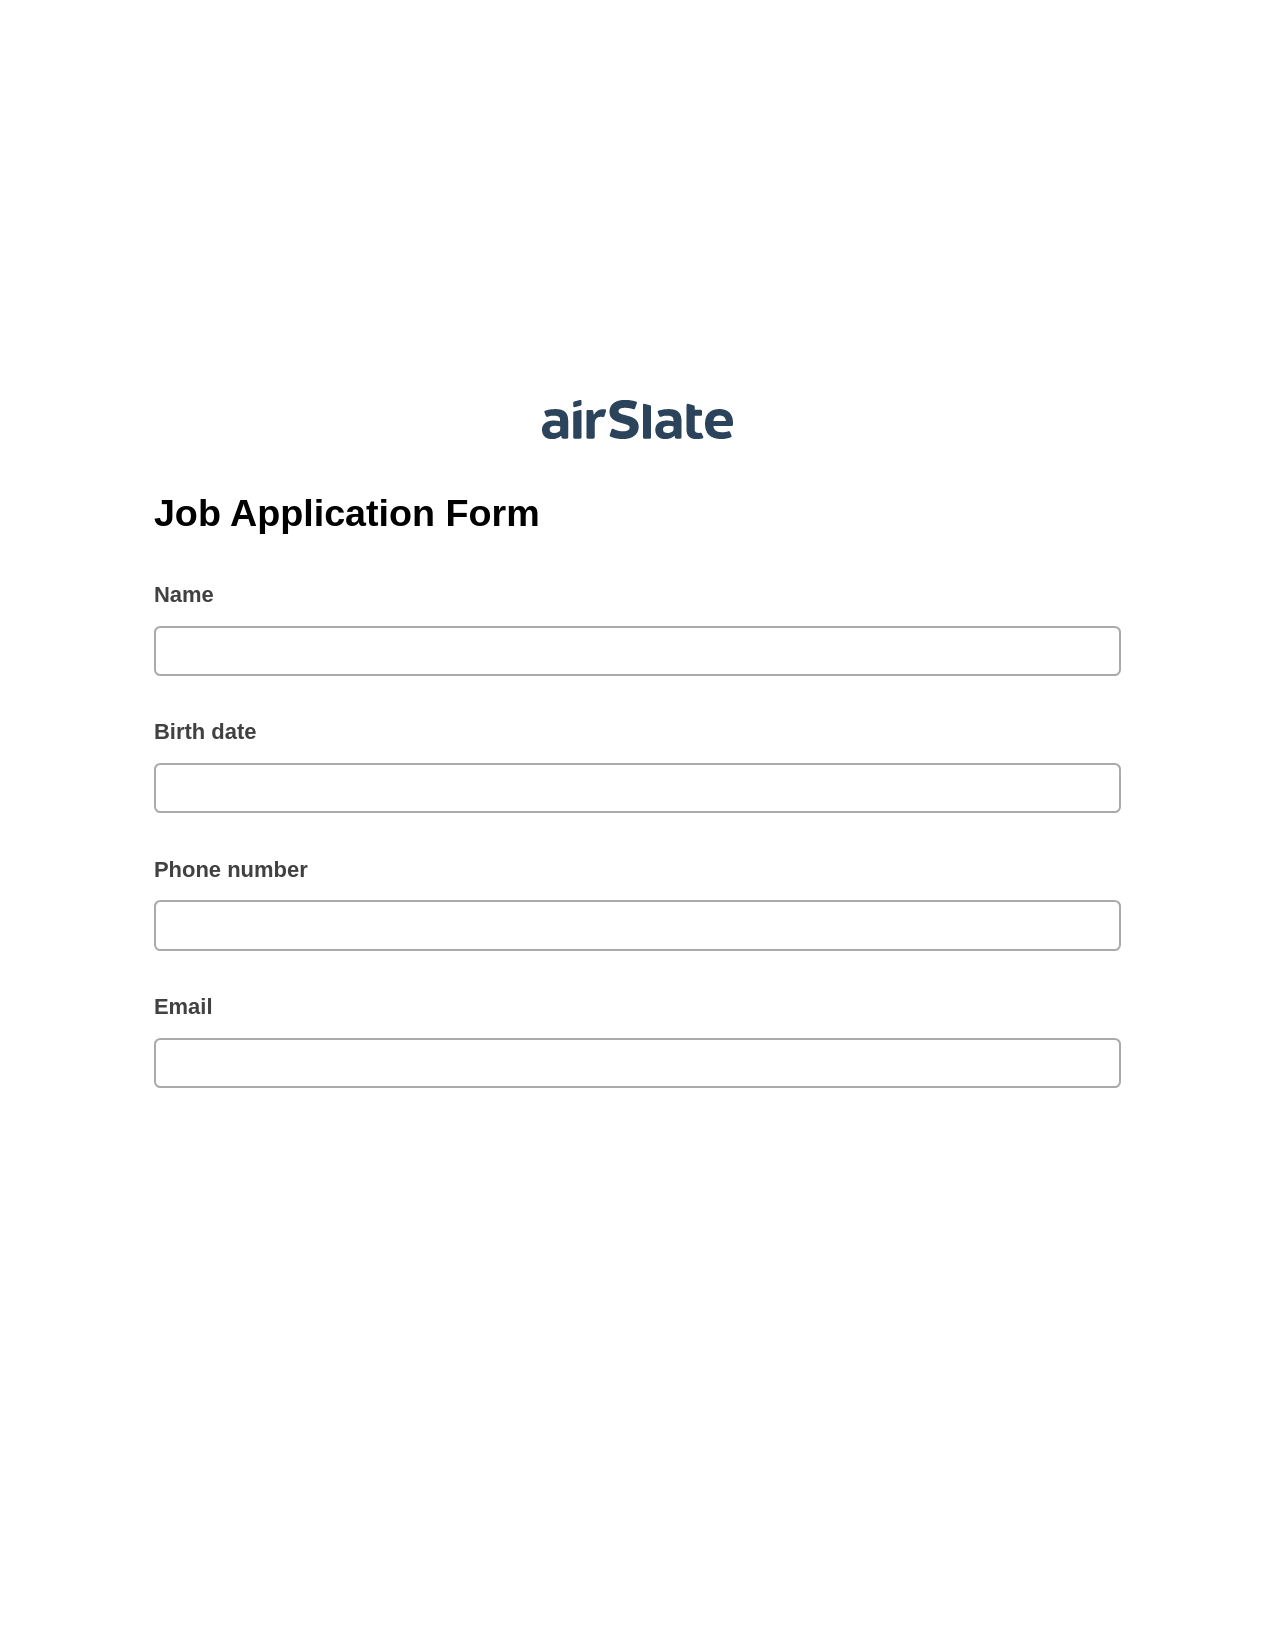 Multirole Job Application Form Pre-fill from Google Sheet Dropdown Options Bot, Reminder Bot, Dropbox Bot